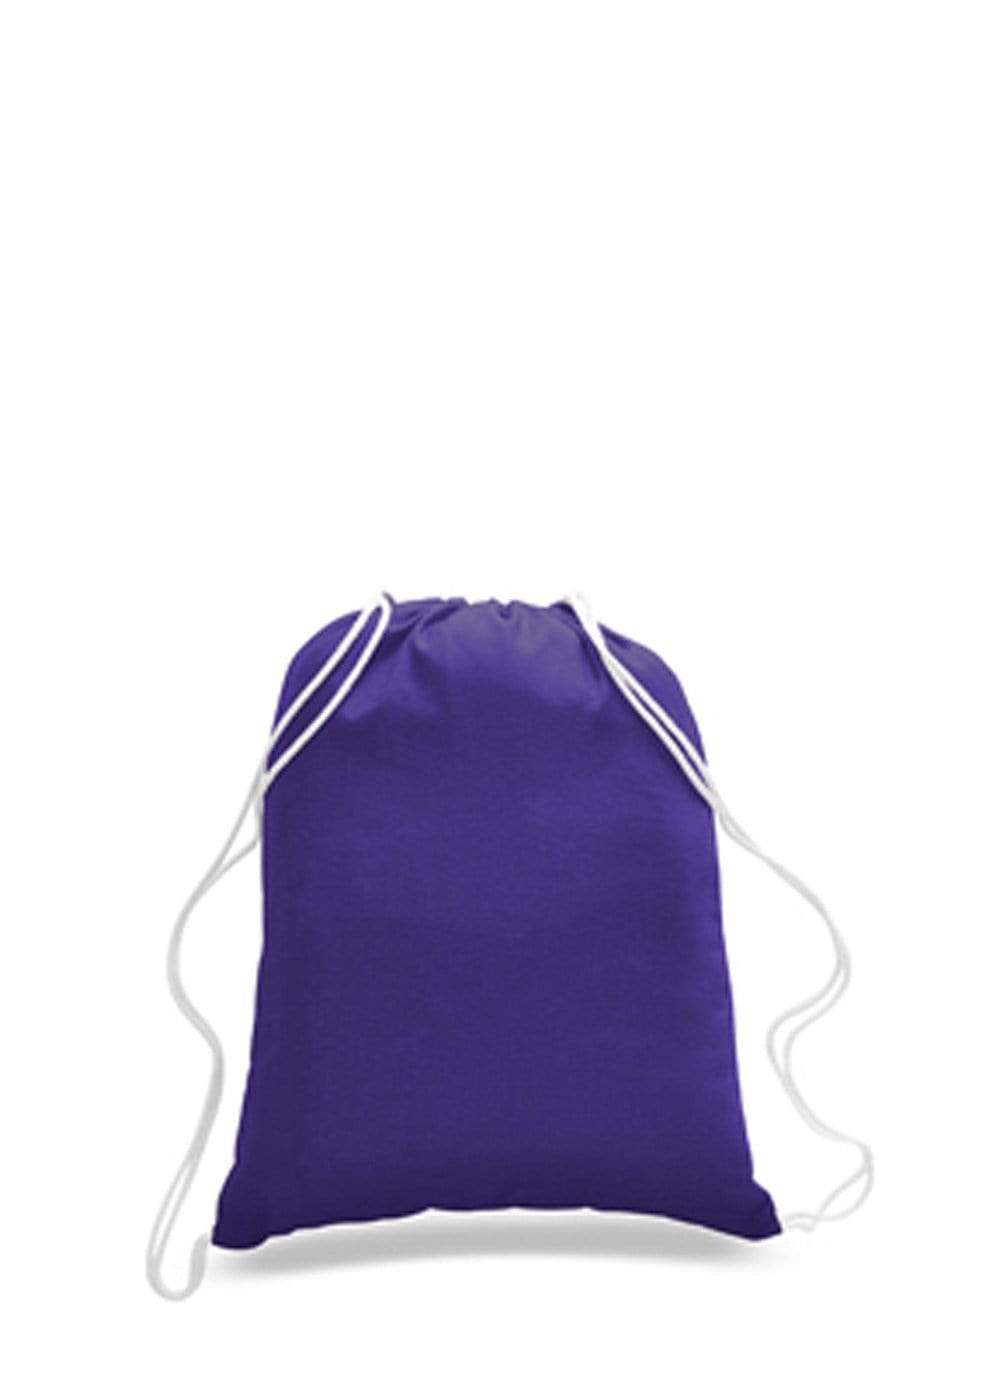 Wholesale Cotton Drawstring Bags, Large Cotton Canvas Drawstring Bags – BagzDepot™